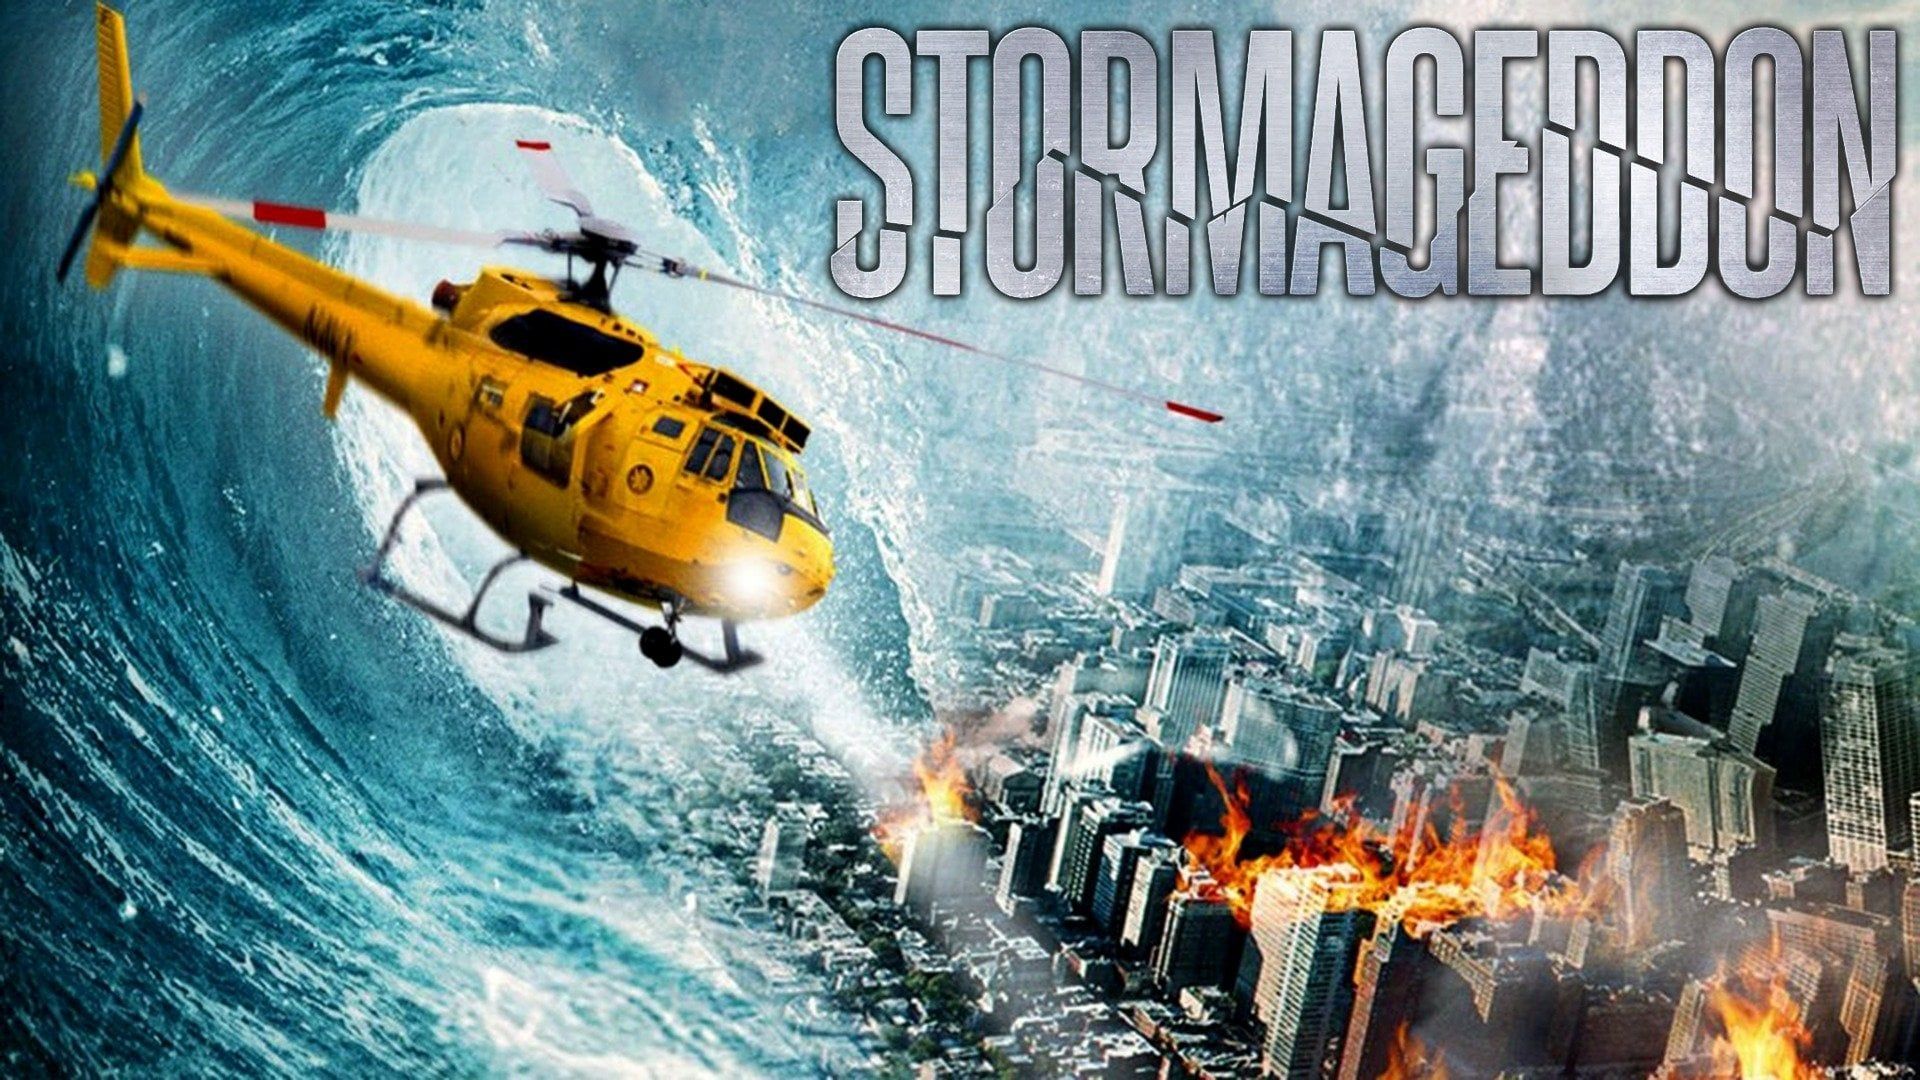 Cubierta de Disaster Wars: Earthquake vs. Tsunami (AKA Stormageddon: Earthquake vs. Tsunami)